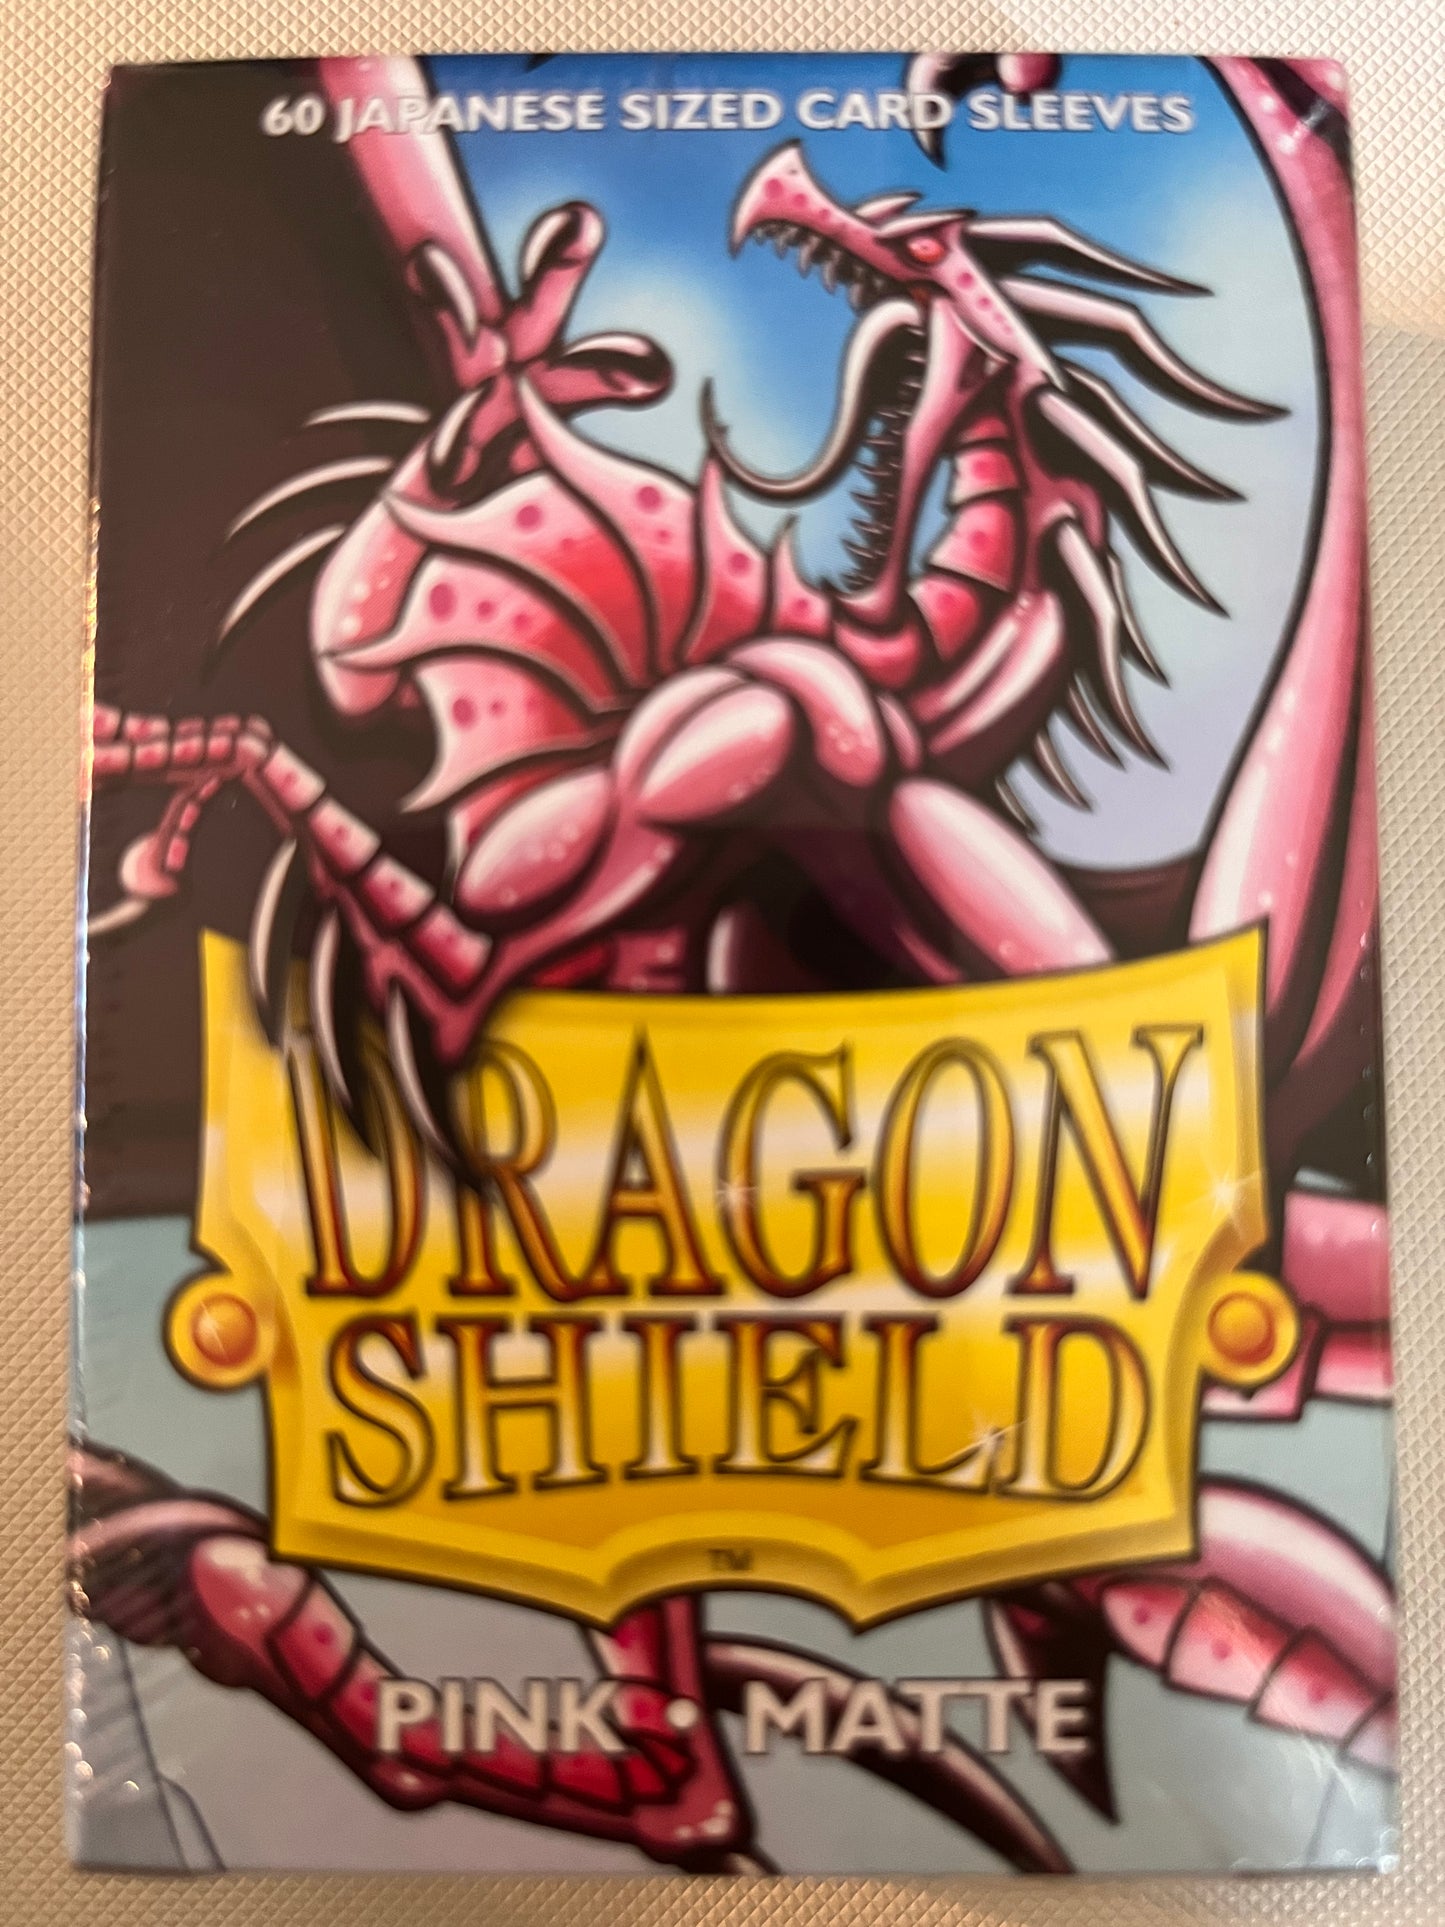 Yu-Gi-Oh! Sized, Dragon Shield Pink Sleeves